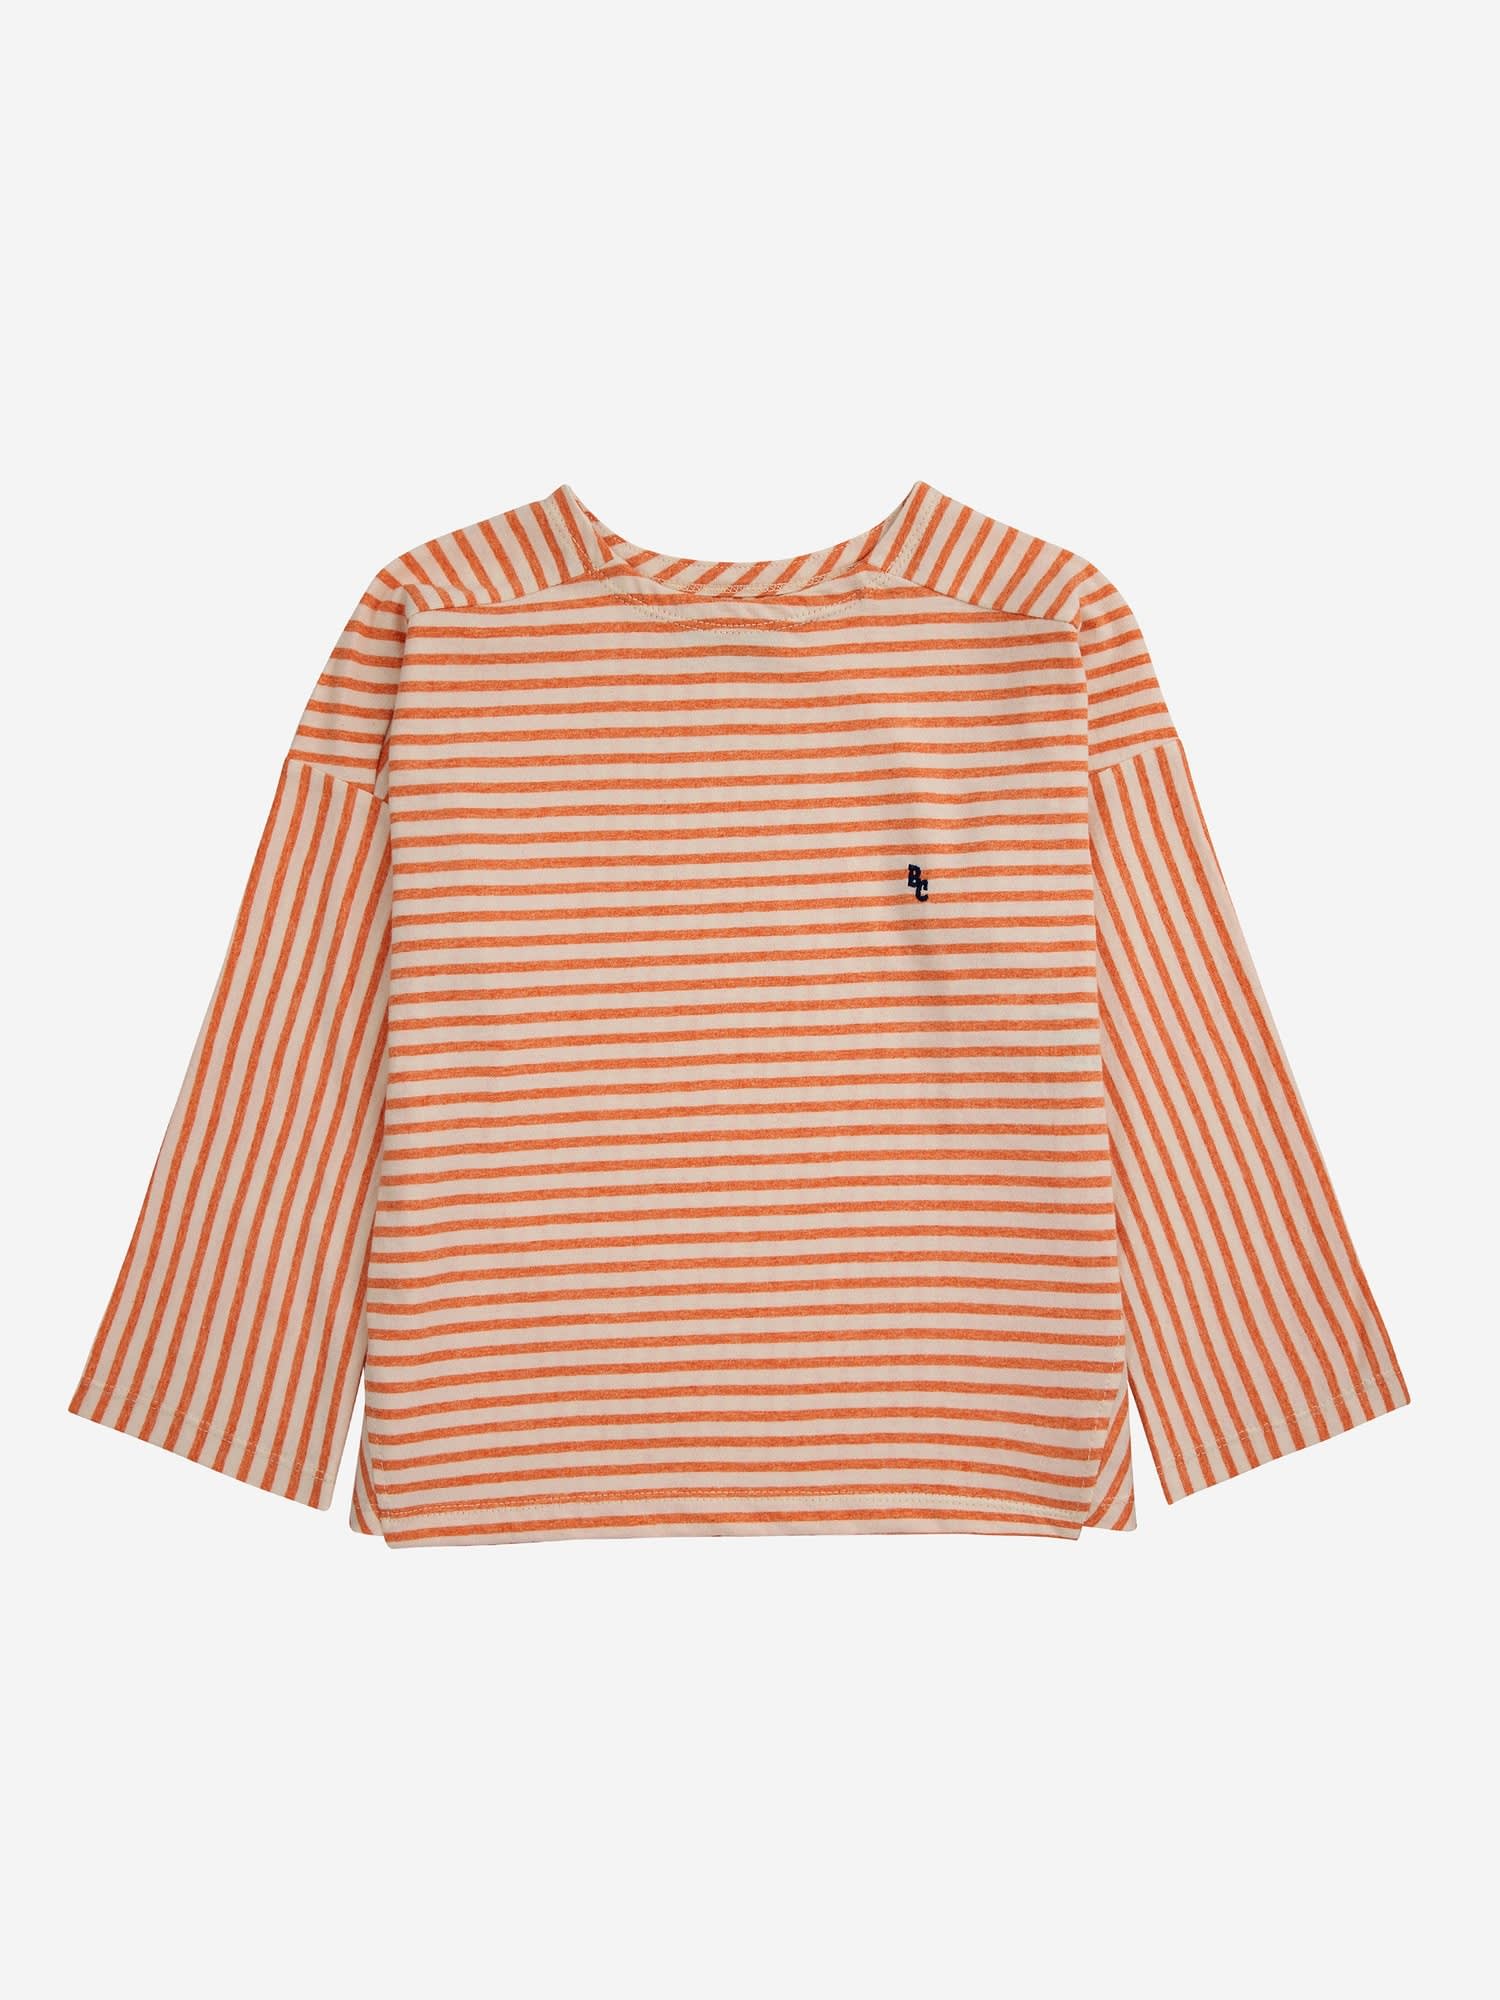 Bobo Choses Orange T-shirt For Kids With Stripes